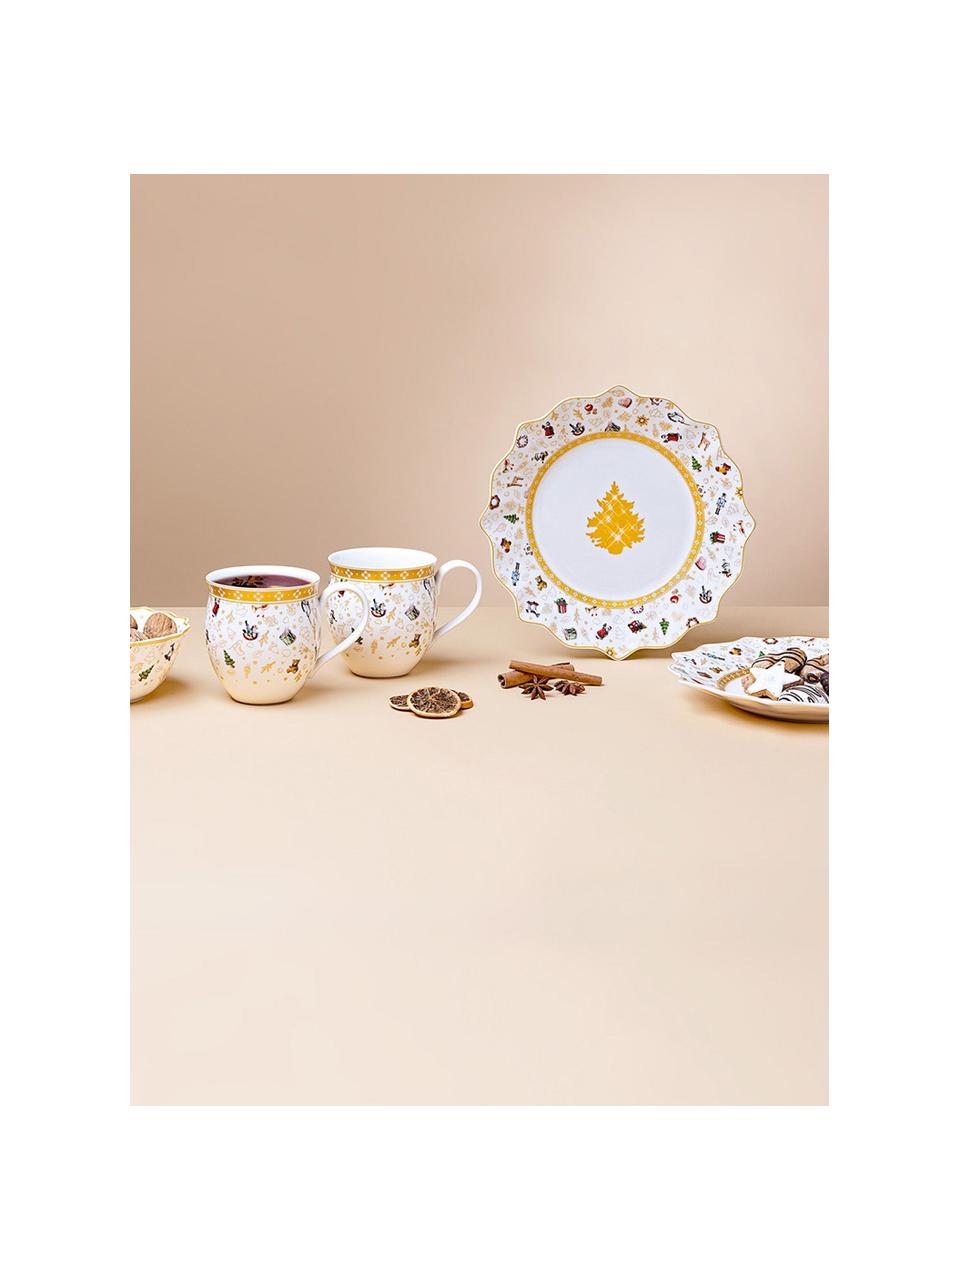 Frühstücks-Set Toy's Delight aus Porzellan, 2 Personen (6er-Set), Premium Porzellan, Weiss, Goldfarben, Mehrfarbig, 2 Personen (6er-Set)